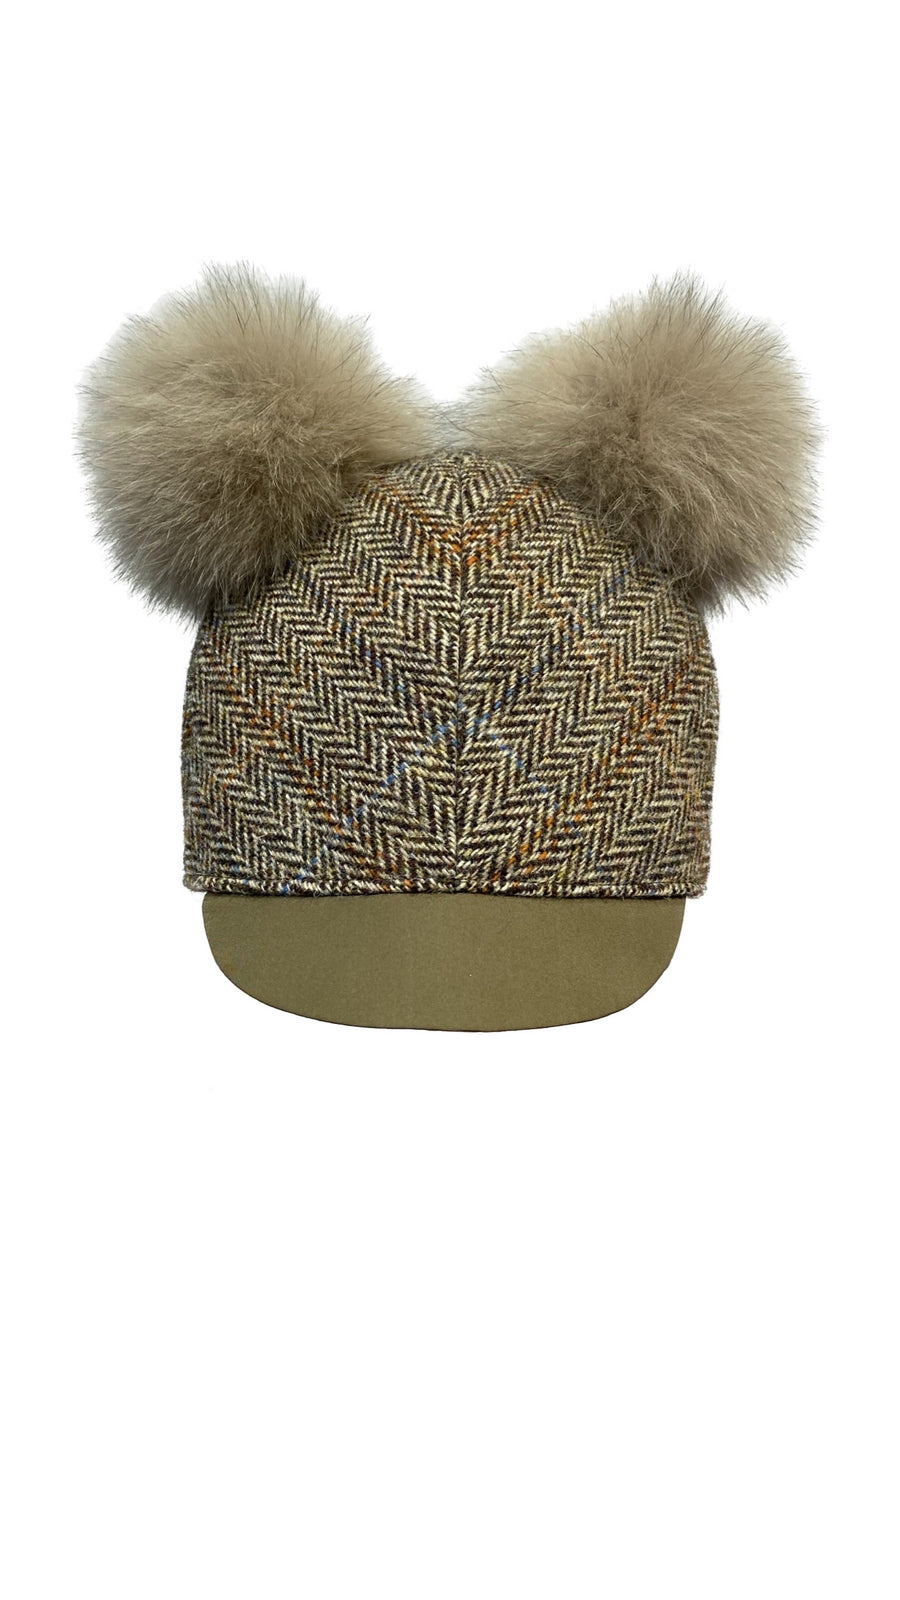 Aki Choklat designed  Harris tweed hat with fun fox fur pompoms